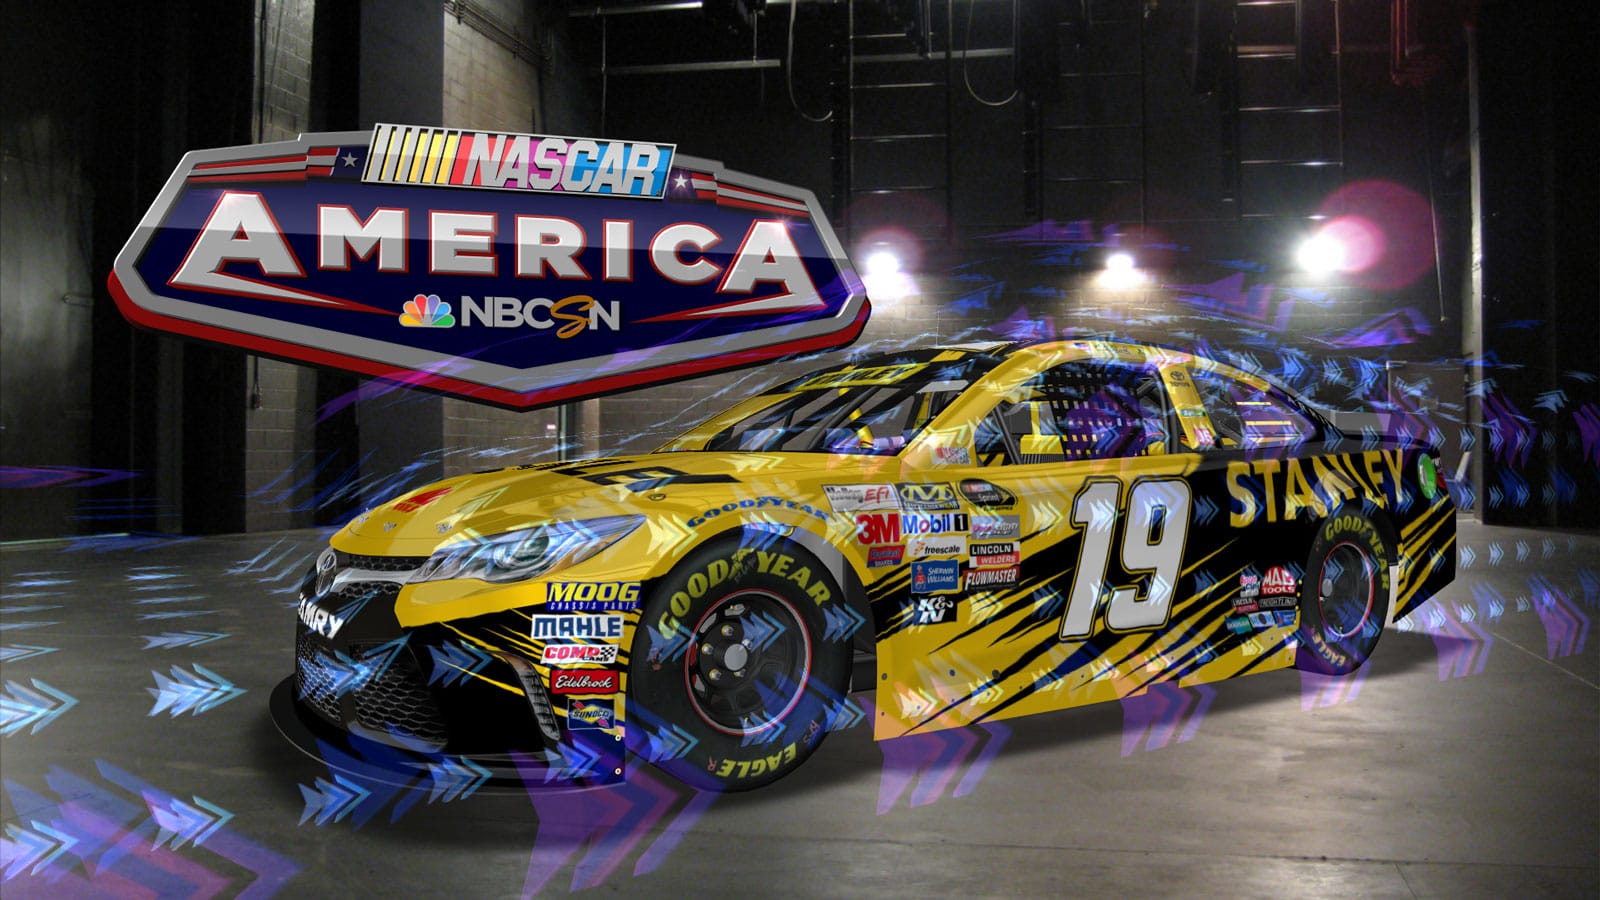 2016 NBC NASCAR Virtual Car Demo Girraphic